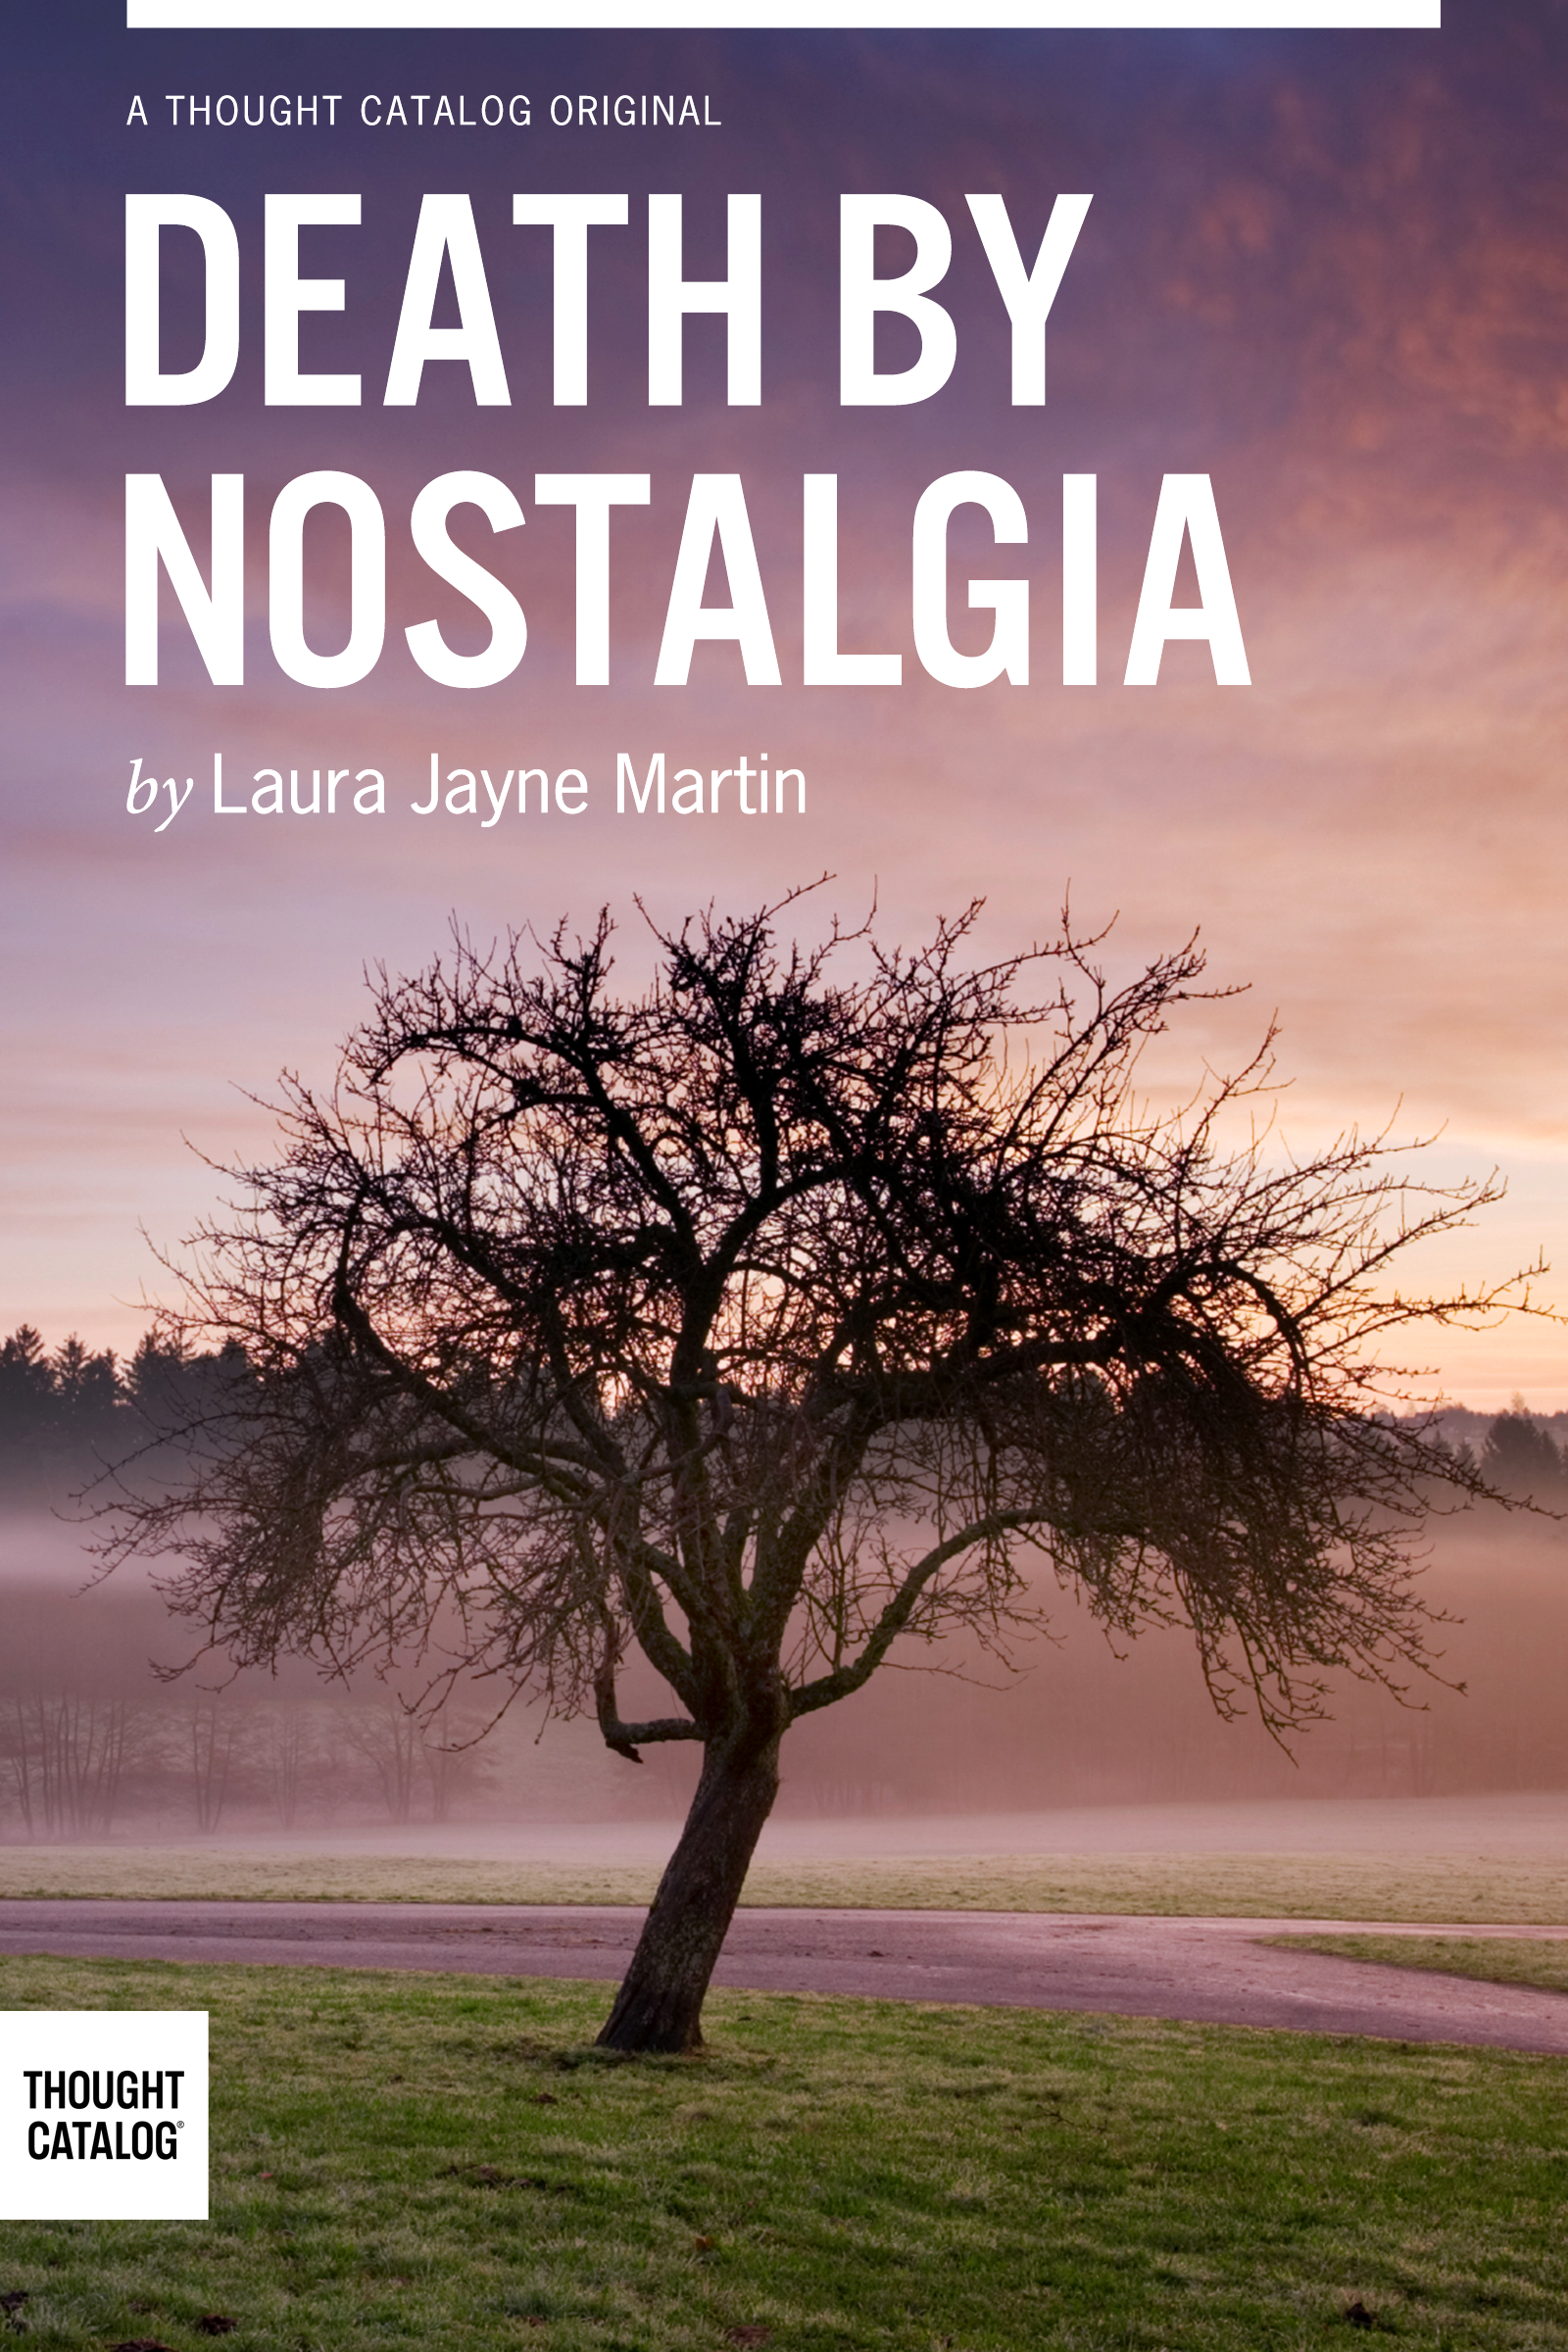 Buy Laura Jayne Martin's eBook, "Death by Nostalgia," here.